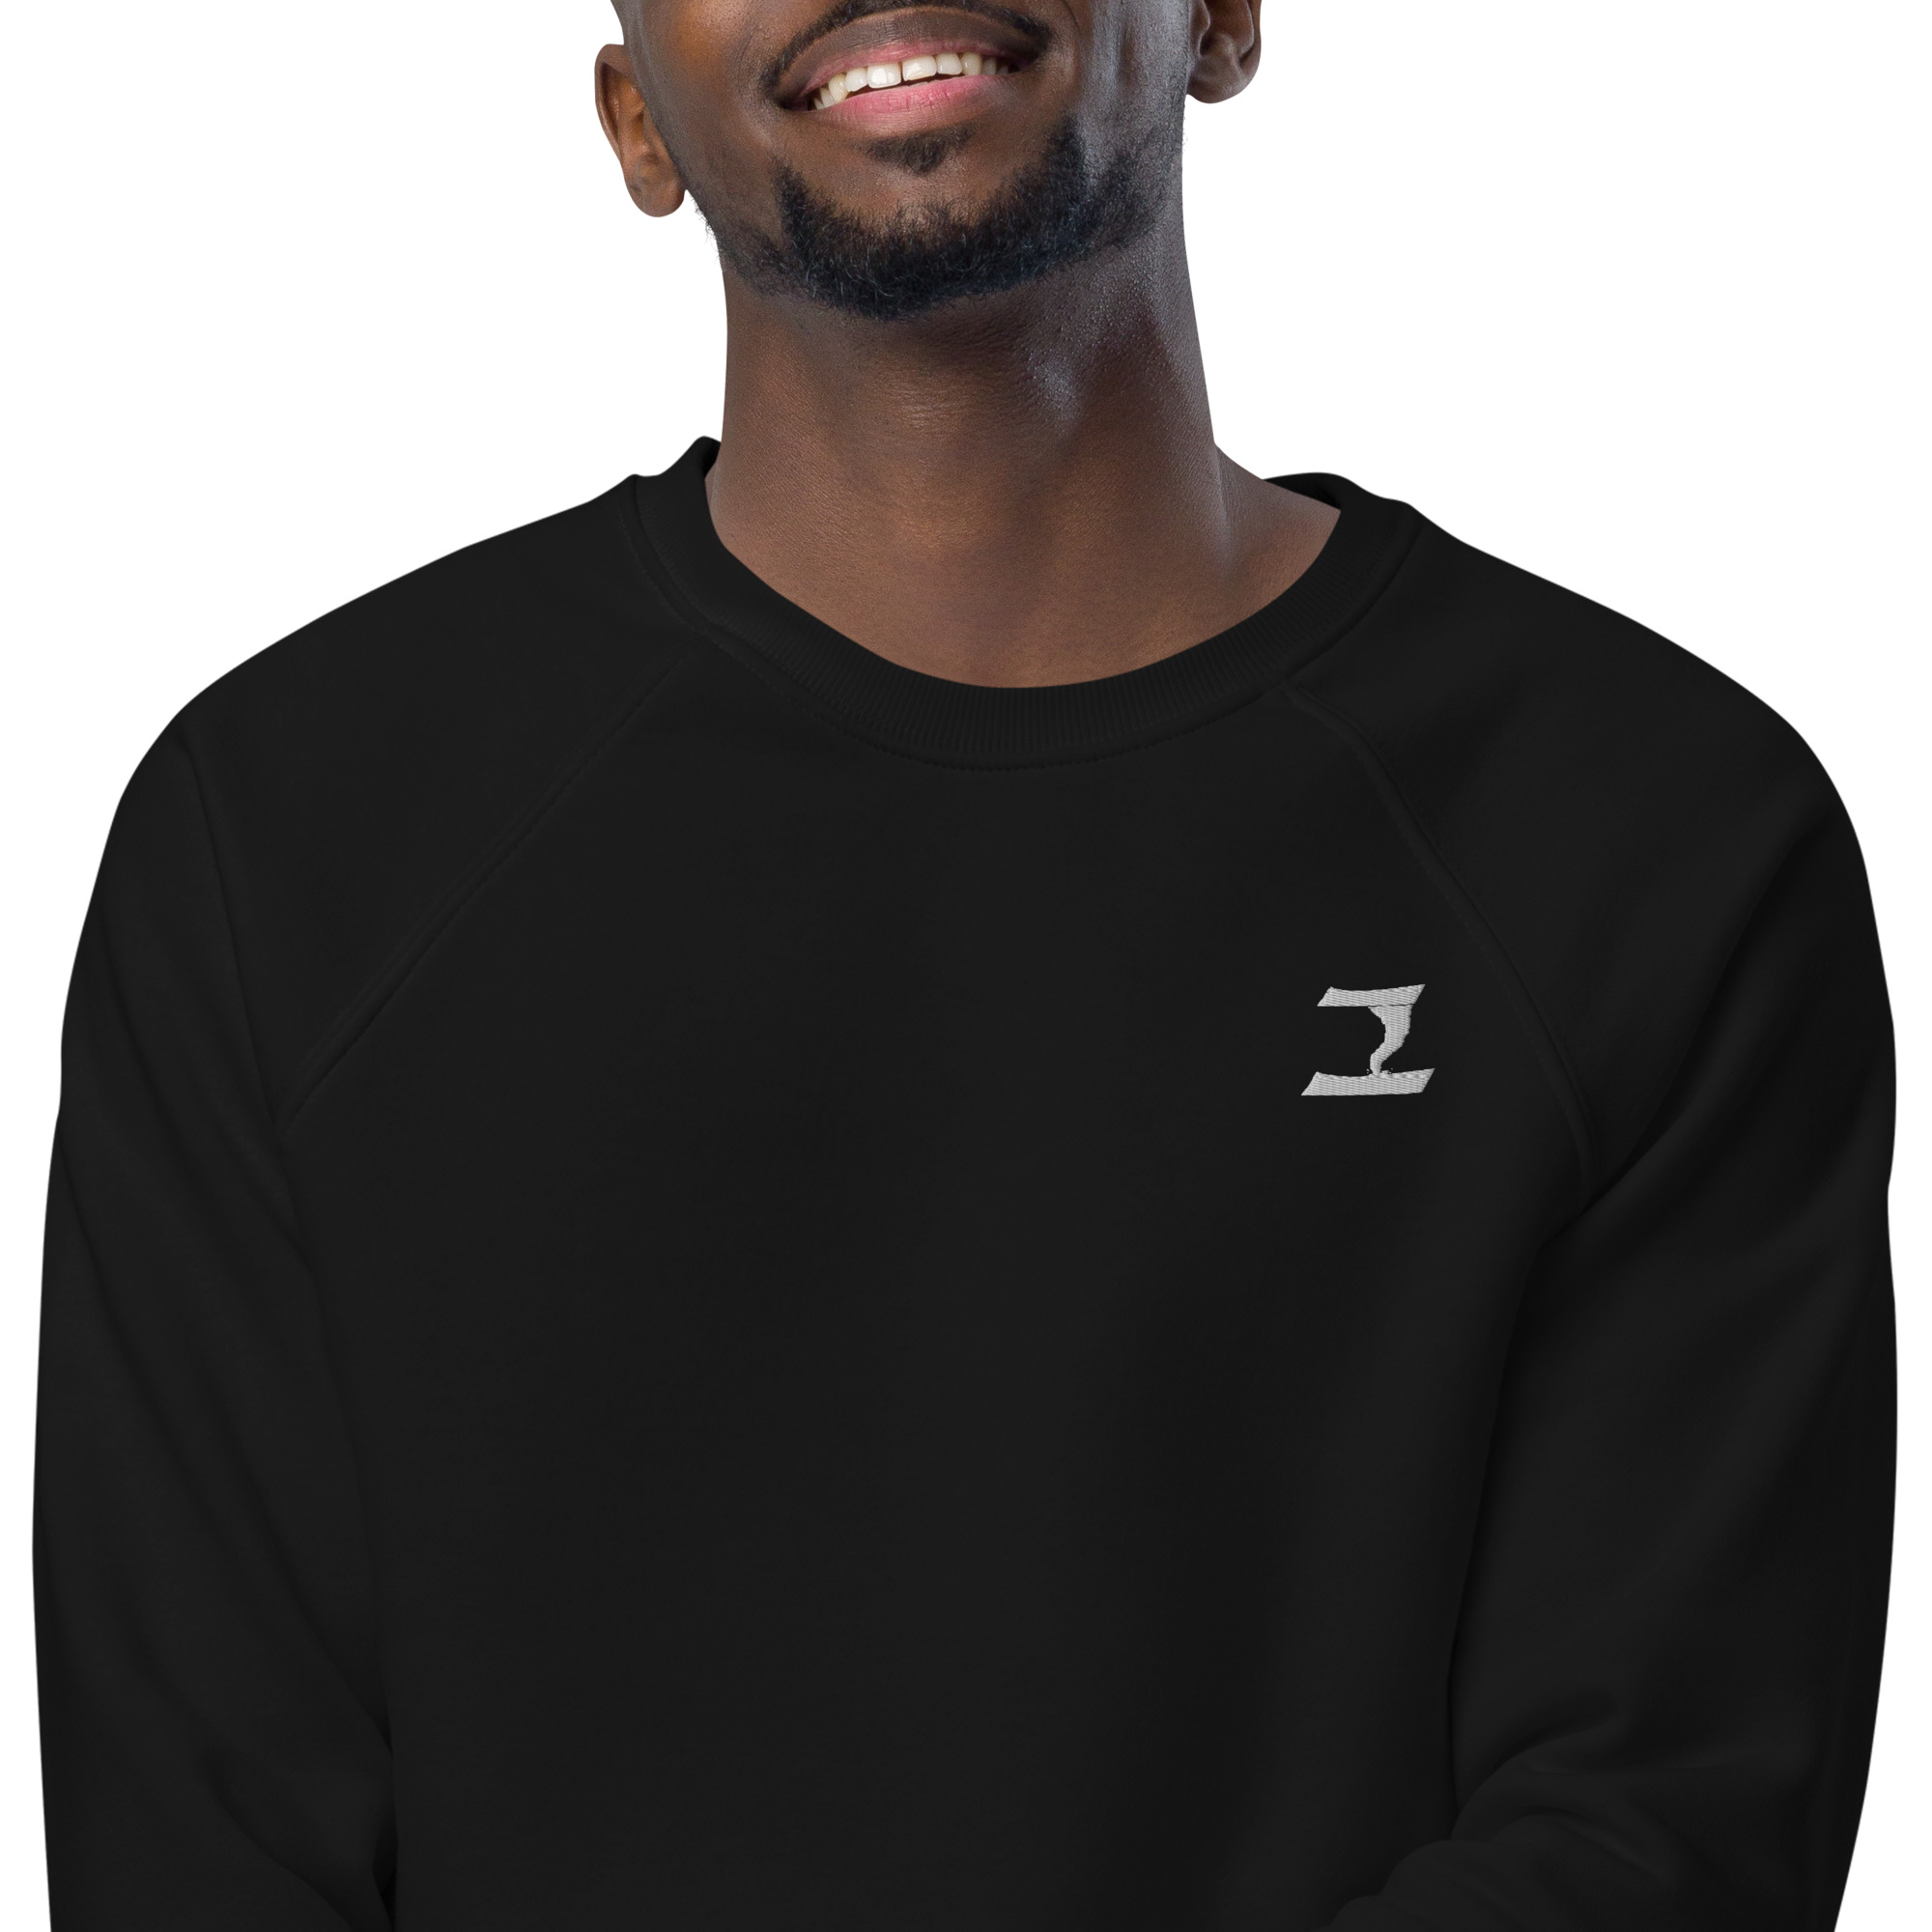 unisex-organic-raglan-sweatshirt-black-zoomed-in-2-6334e2624ad10.jpg